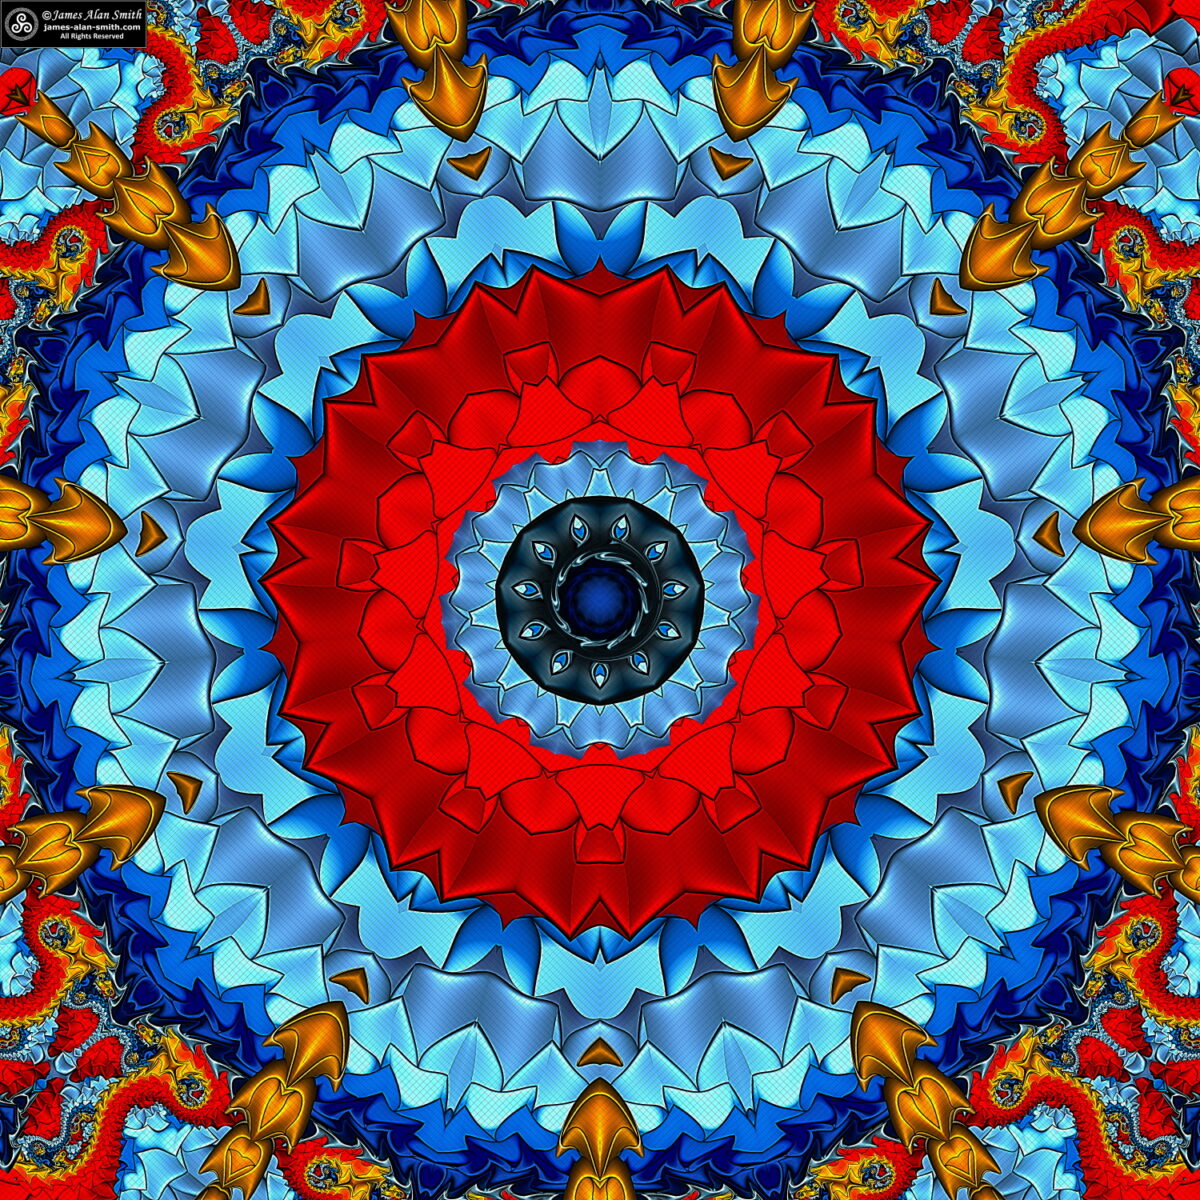 Unusual Mandala Series #011622: Artwork by James Alan Smith